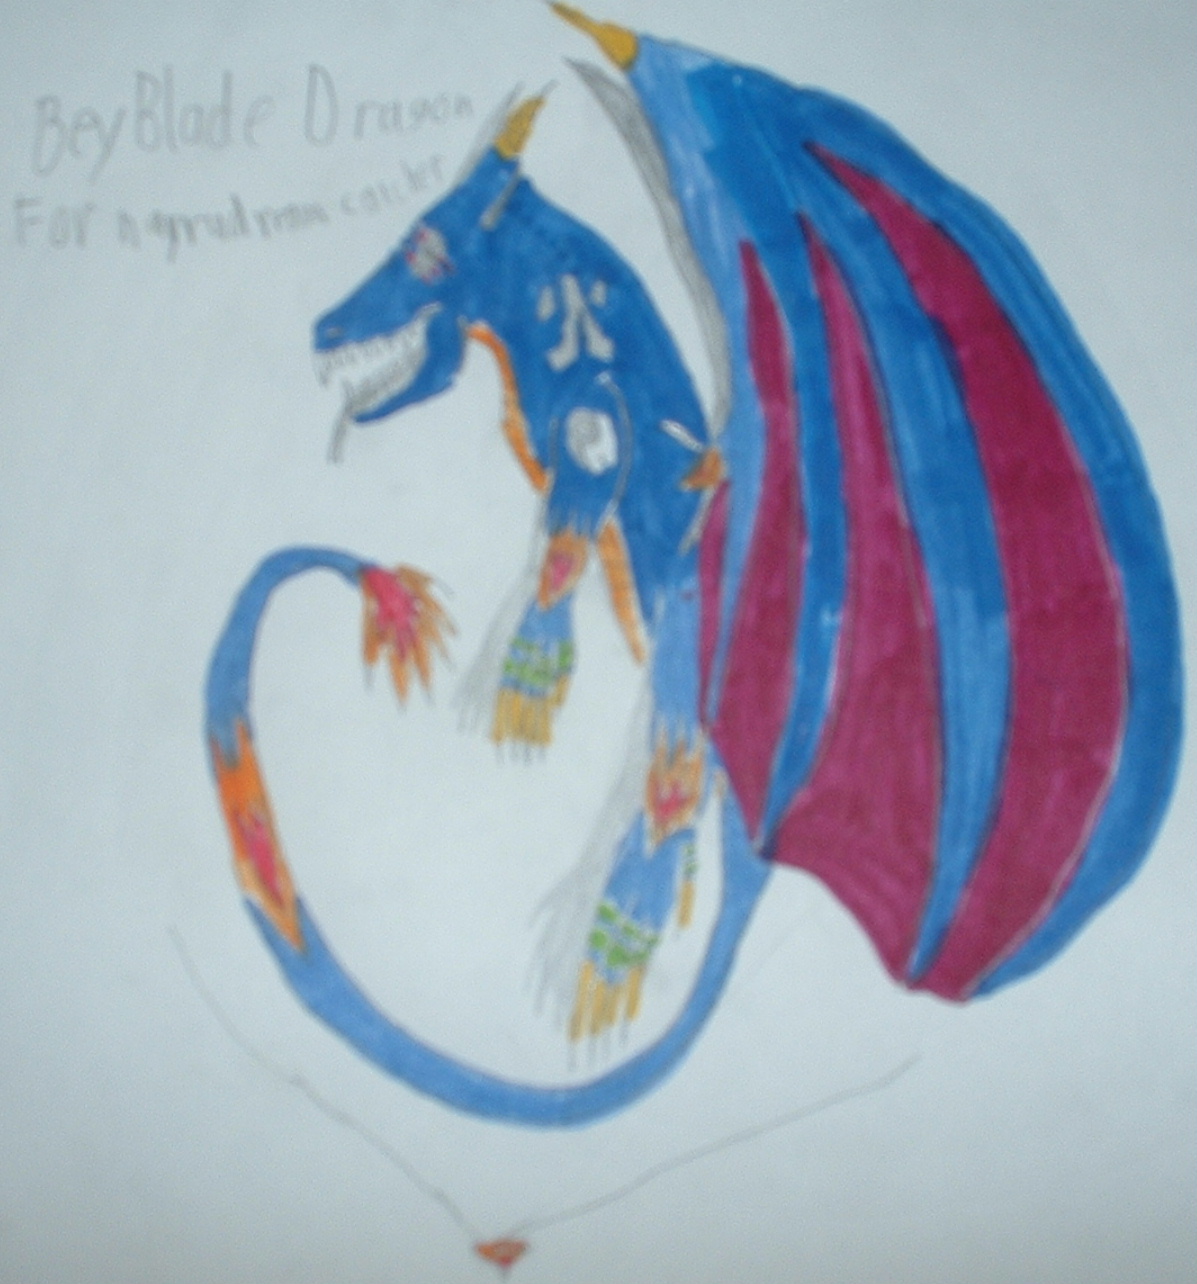 Beybalade dragon for nayrudreamcatcher by Shadowkitsunedragon